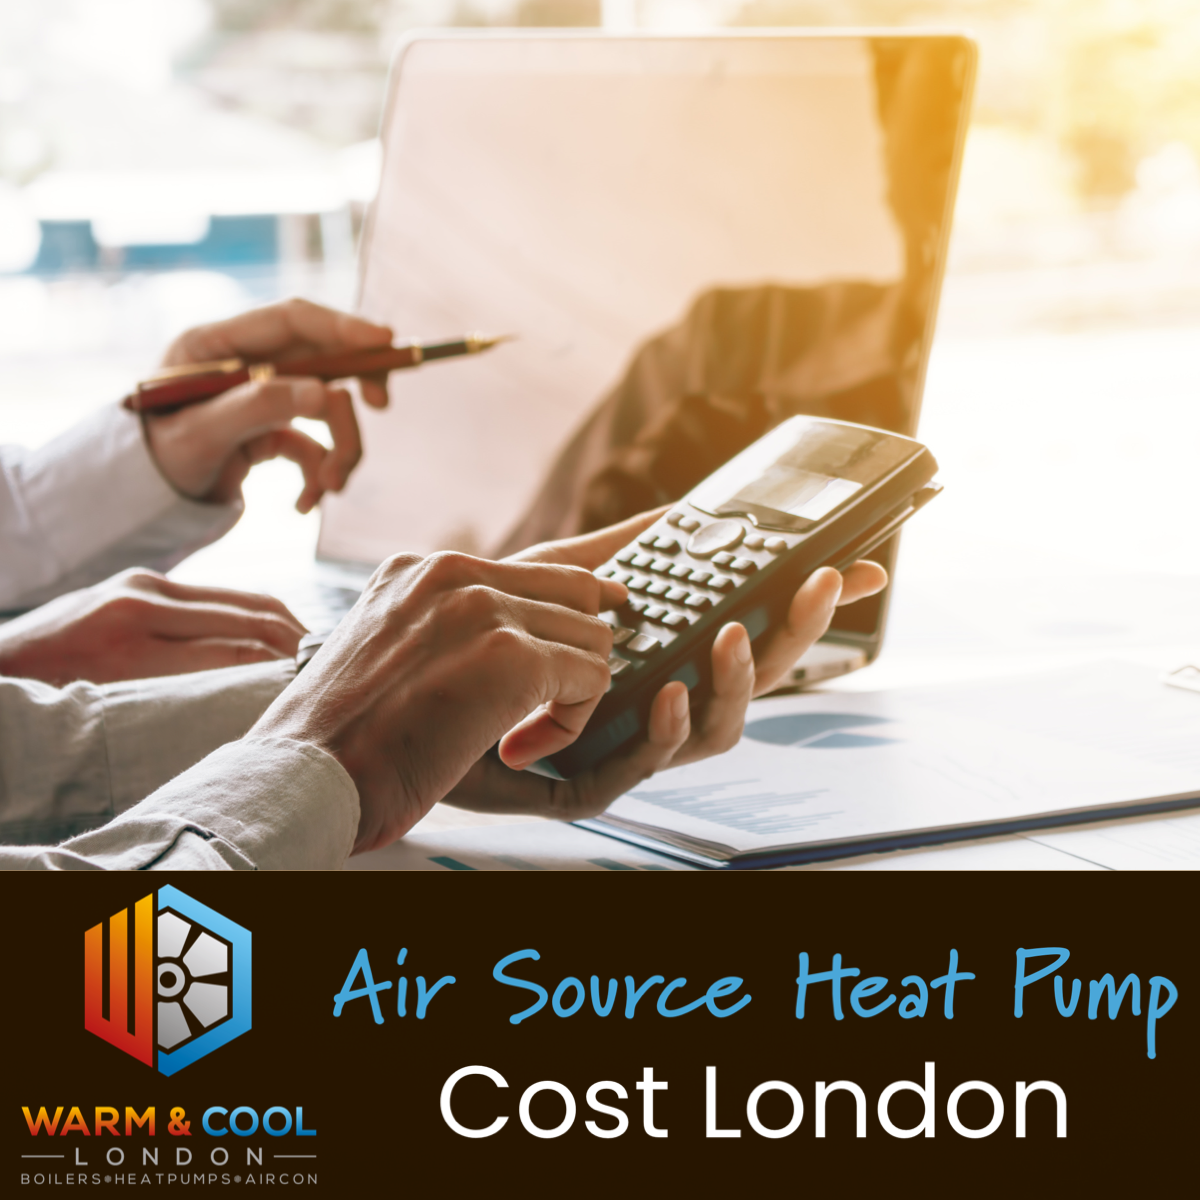 WCL Air Source Heat Pump Cost